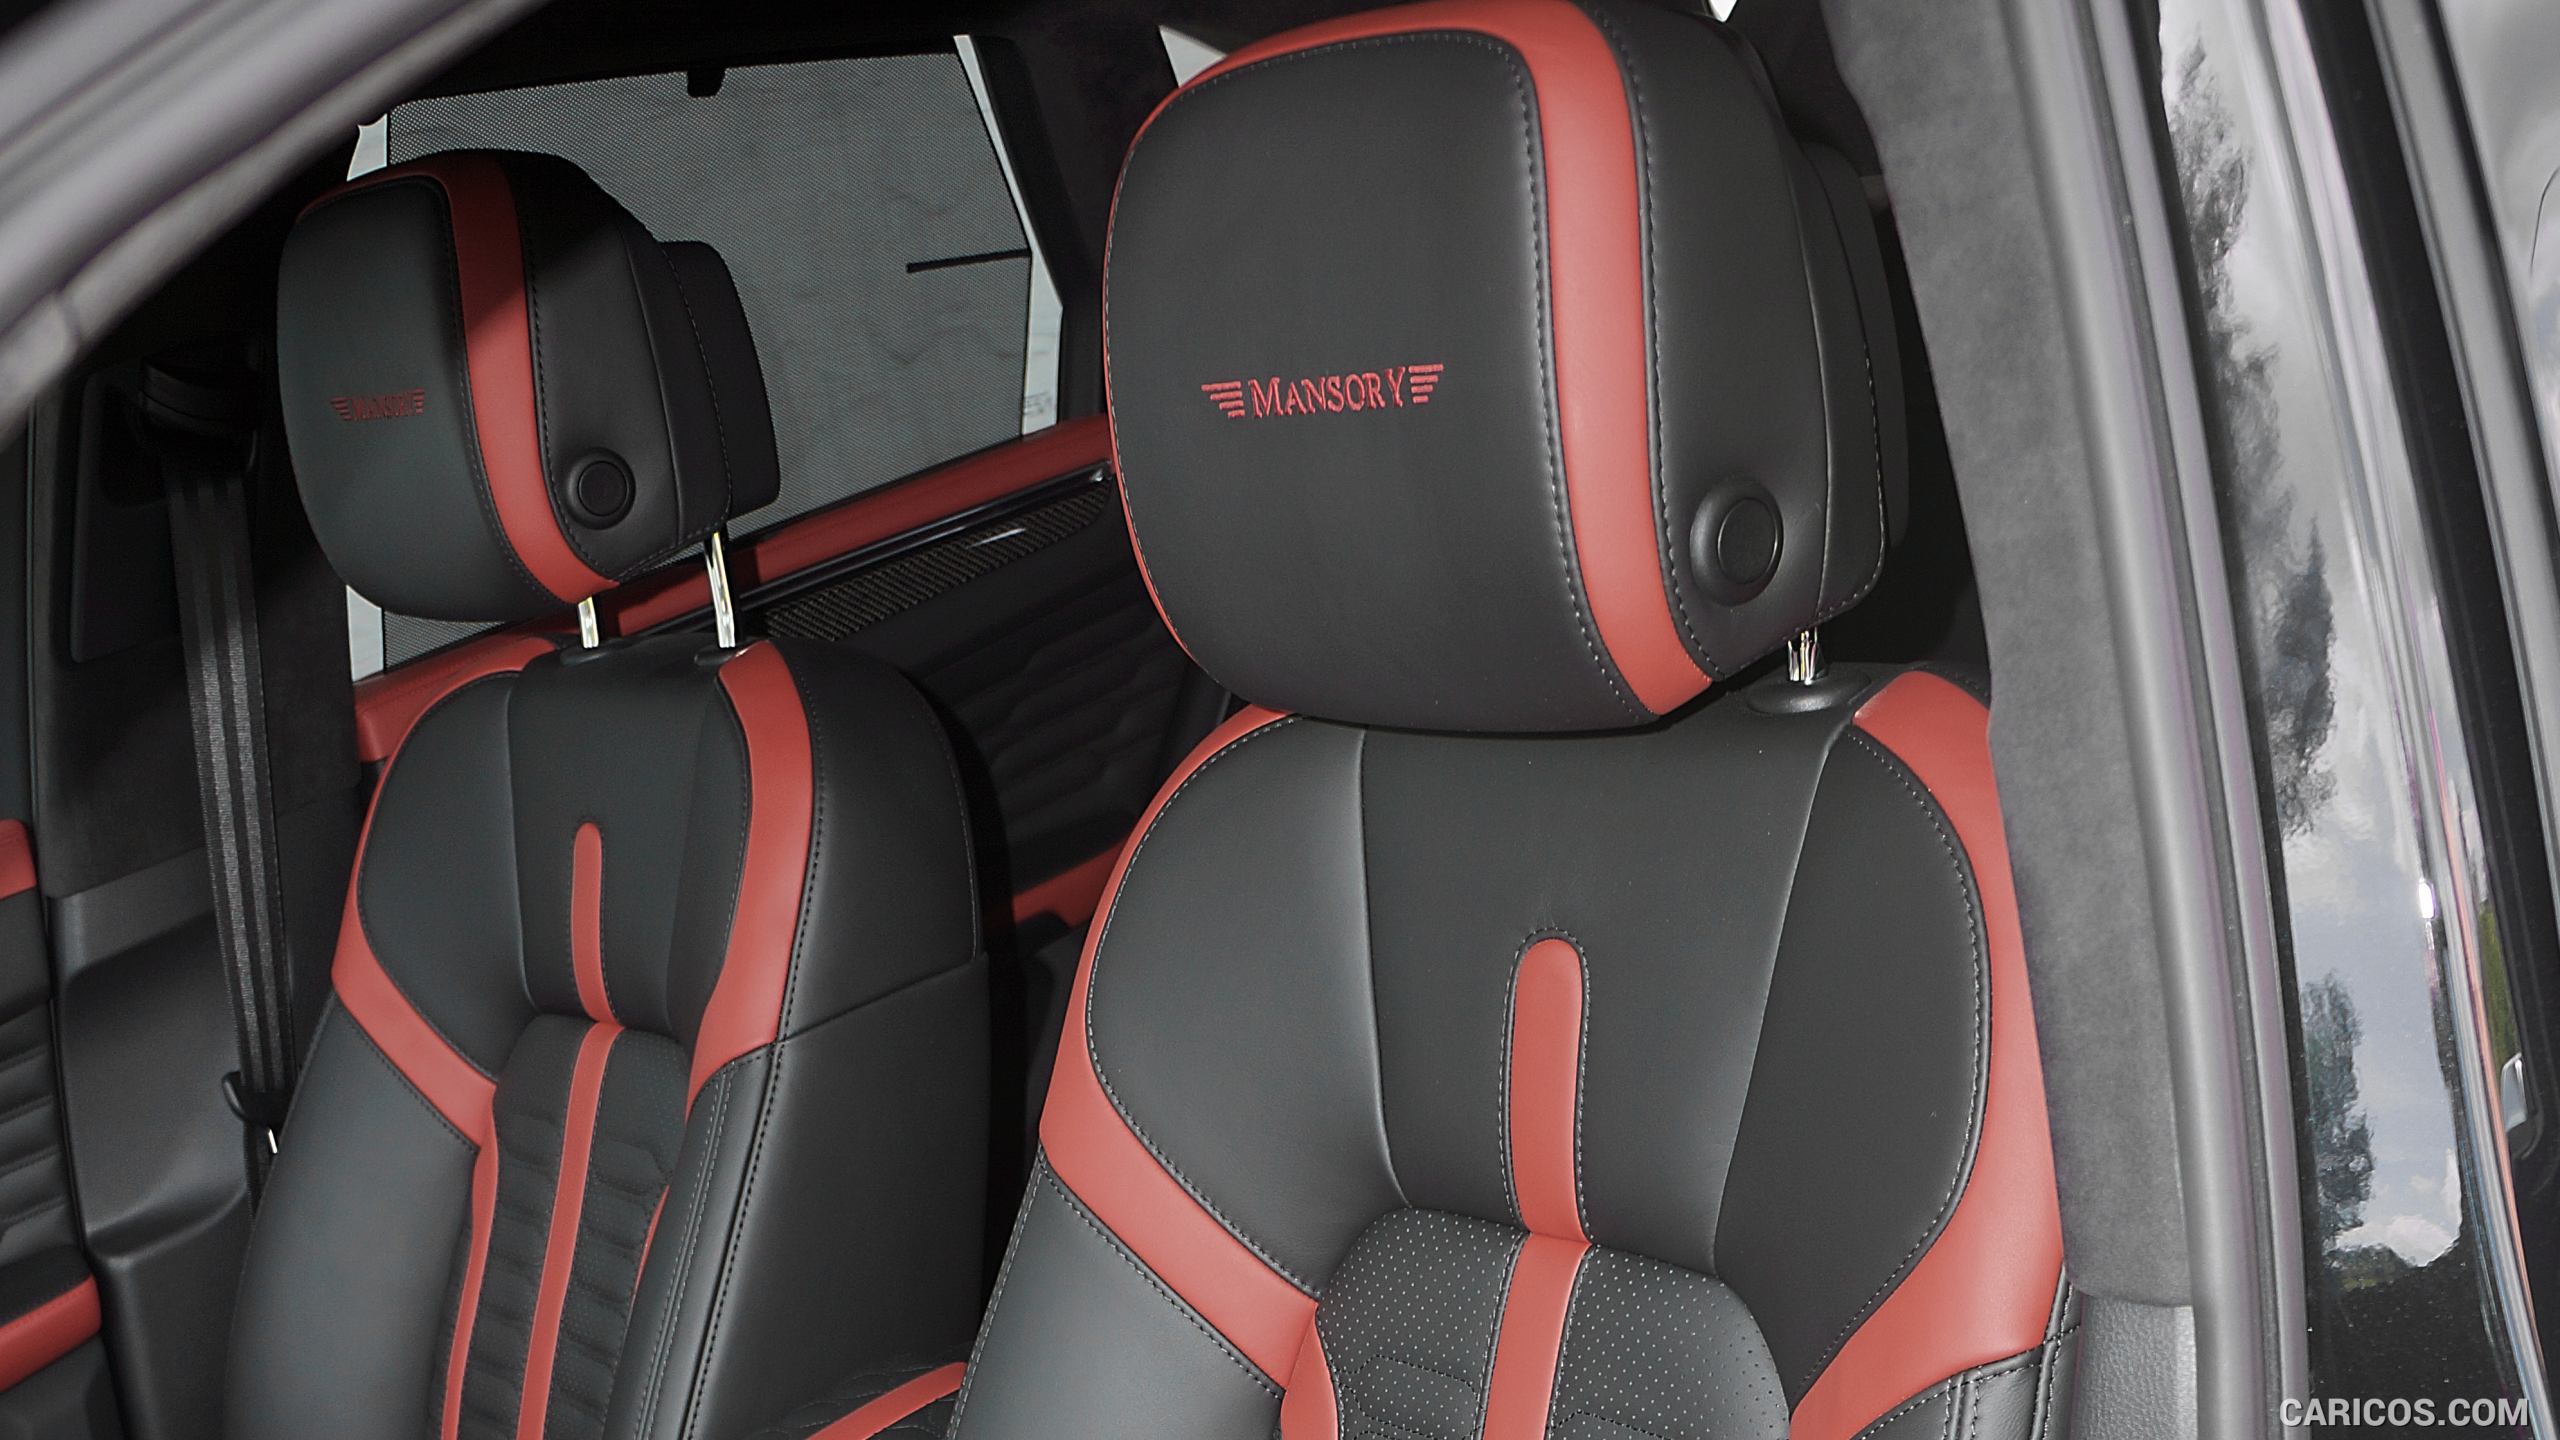 2015 MANSORY Porsche Macan - Interior Front Seats, #9 of 10